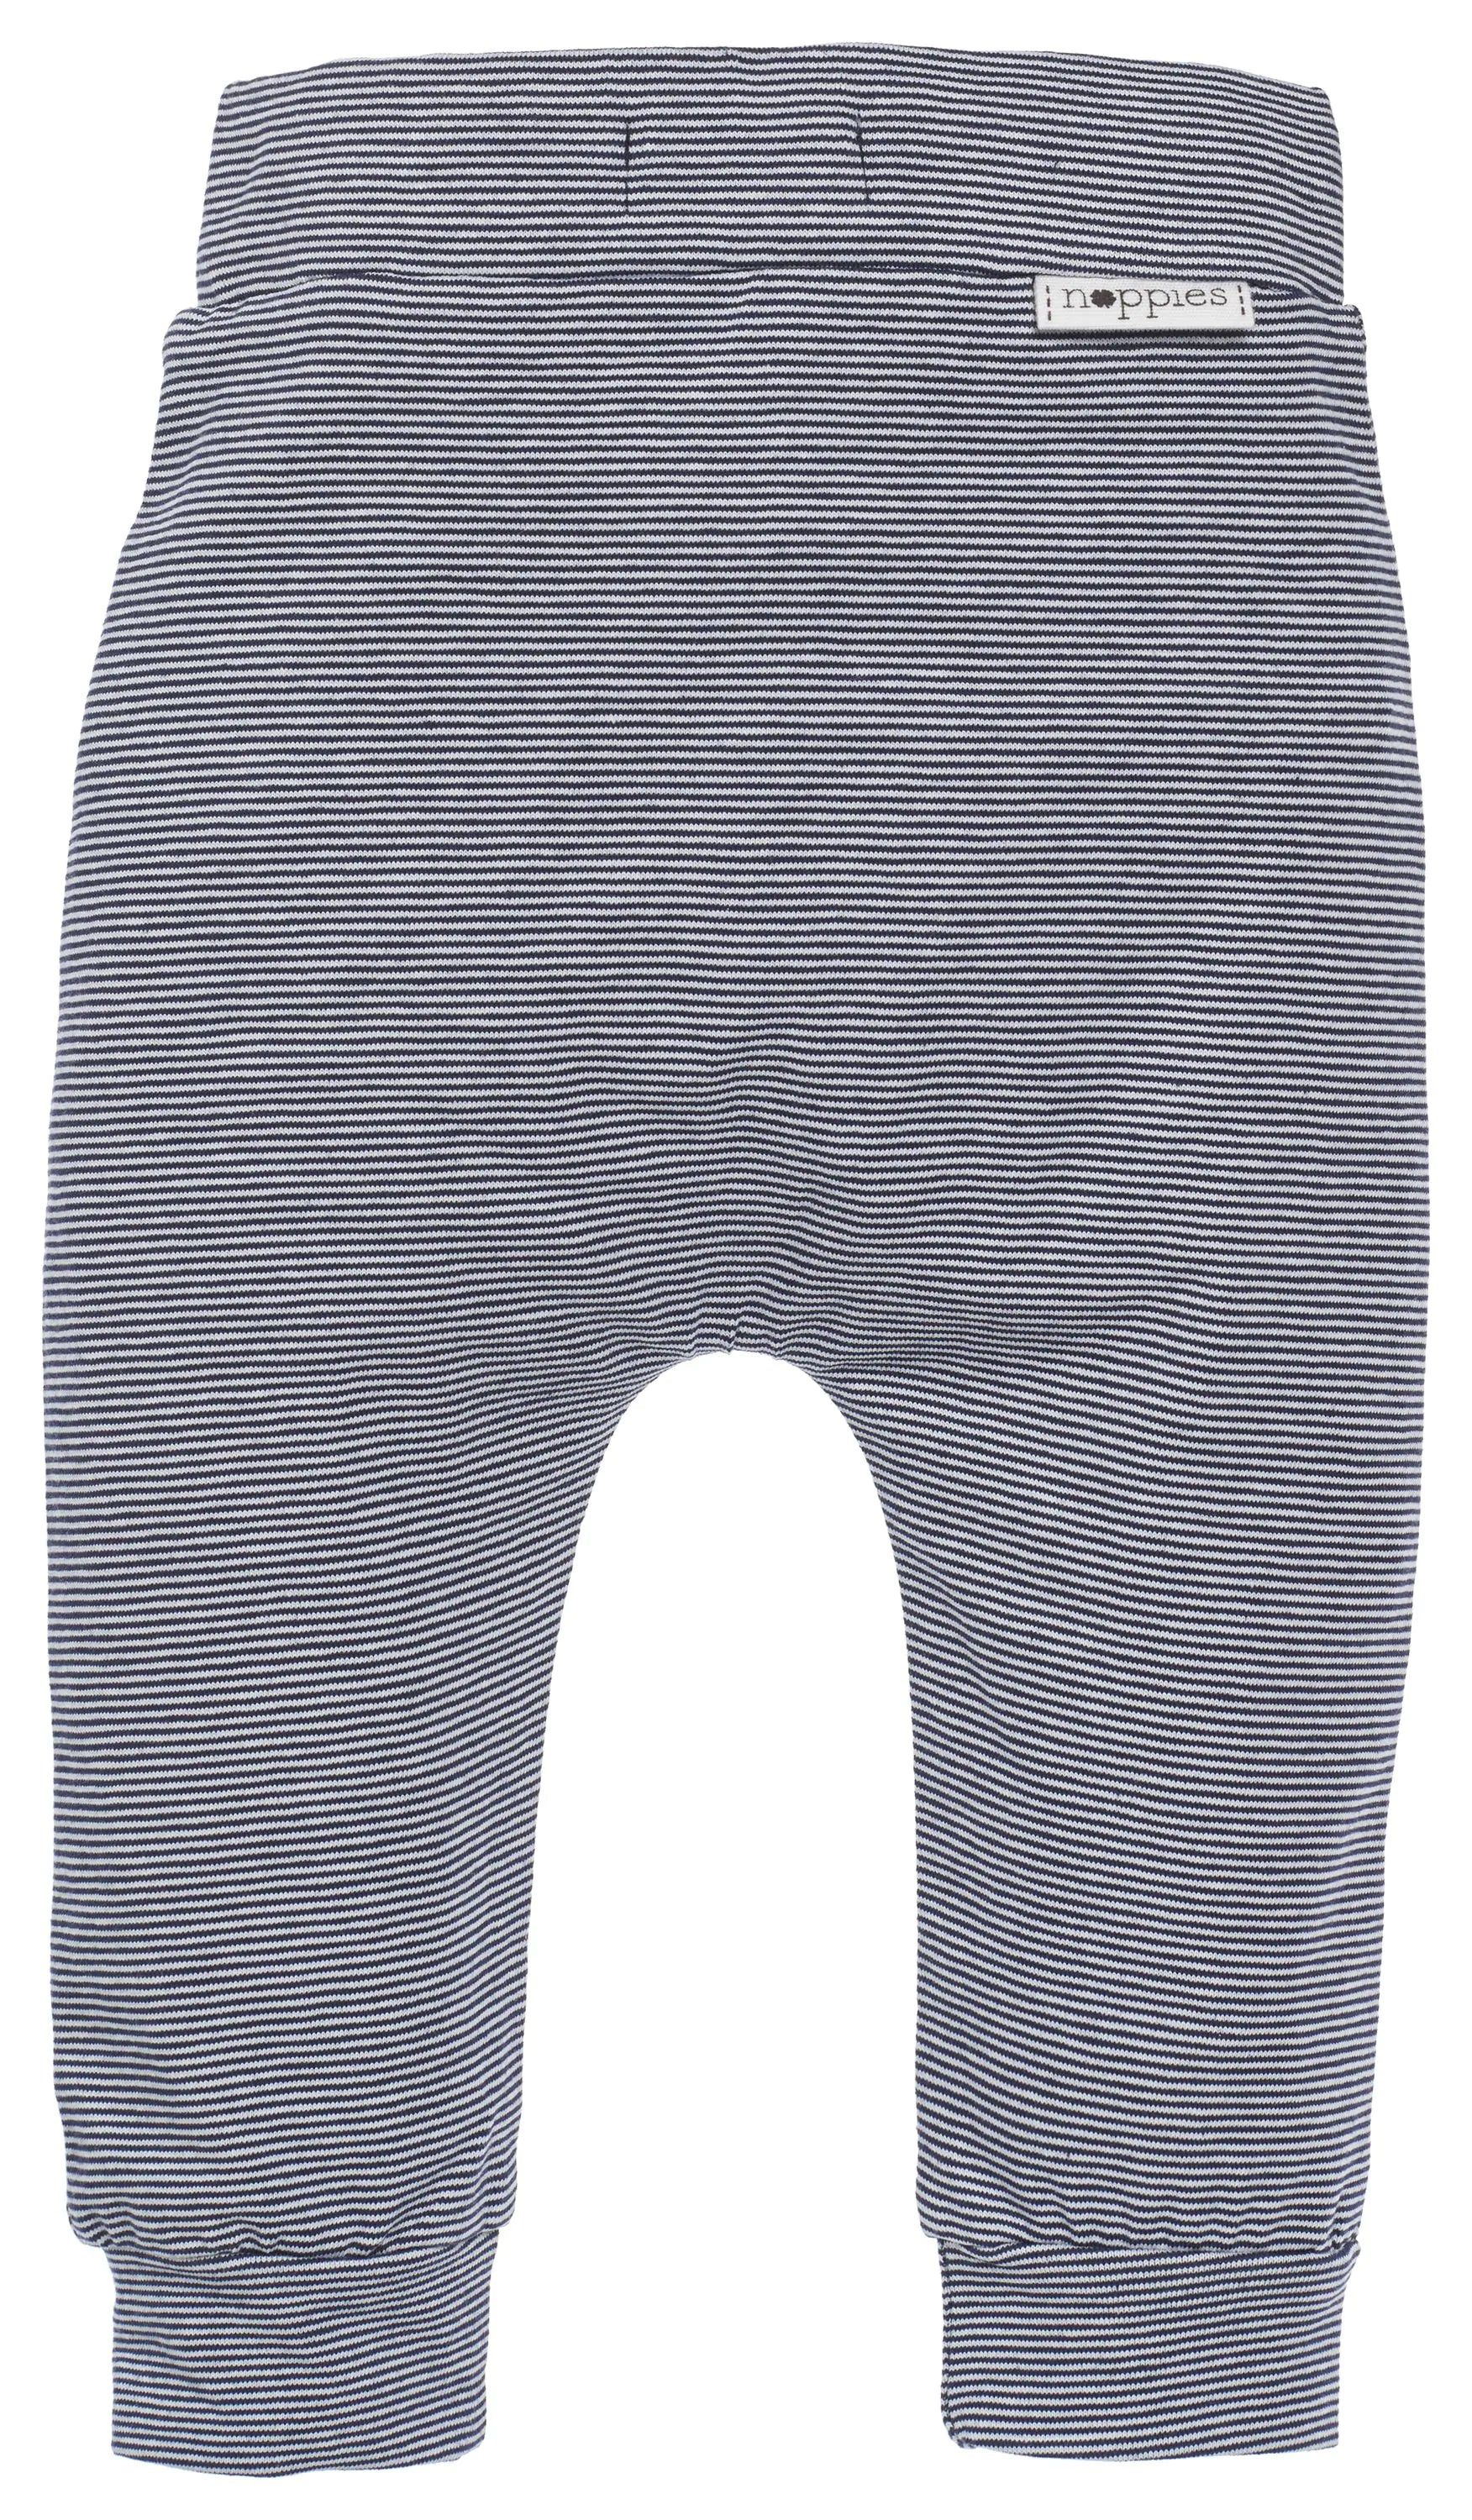 Pantalon Bleu marine Prema - Noppies - Premium Vêtement bébé from NOPPIES - Just €9.99! Shop now at BABY PREMA